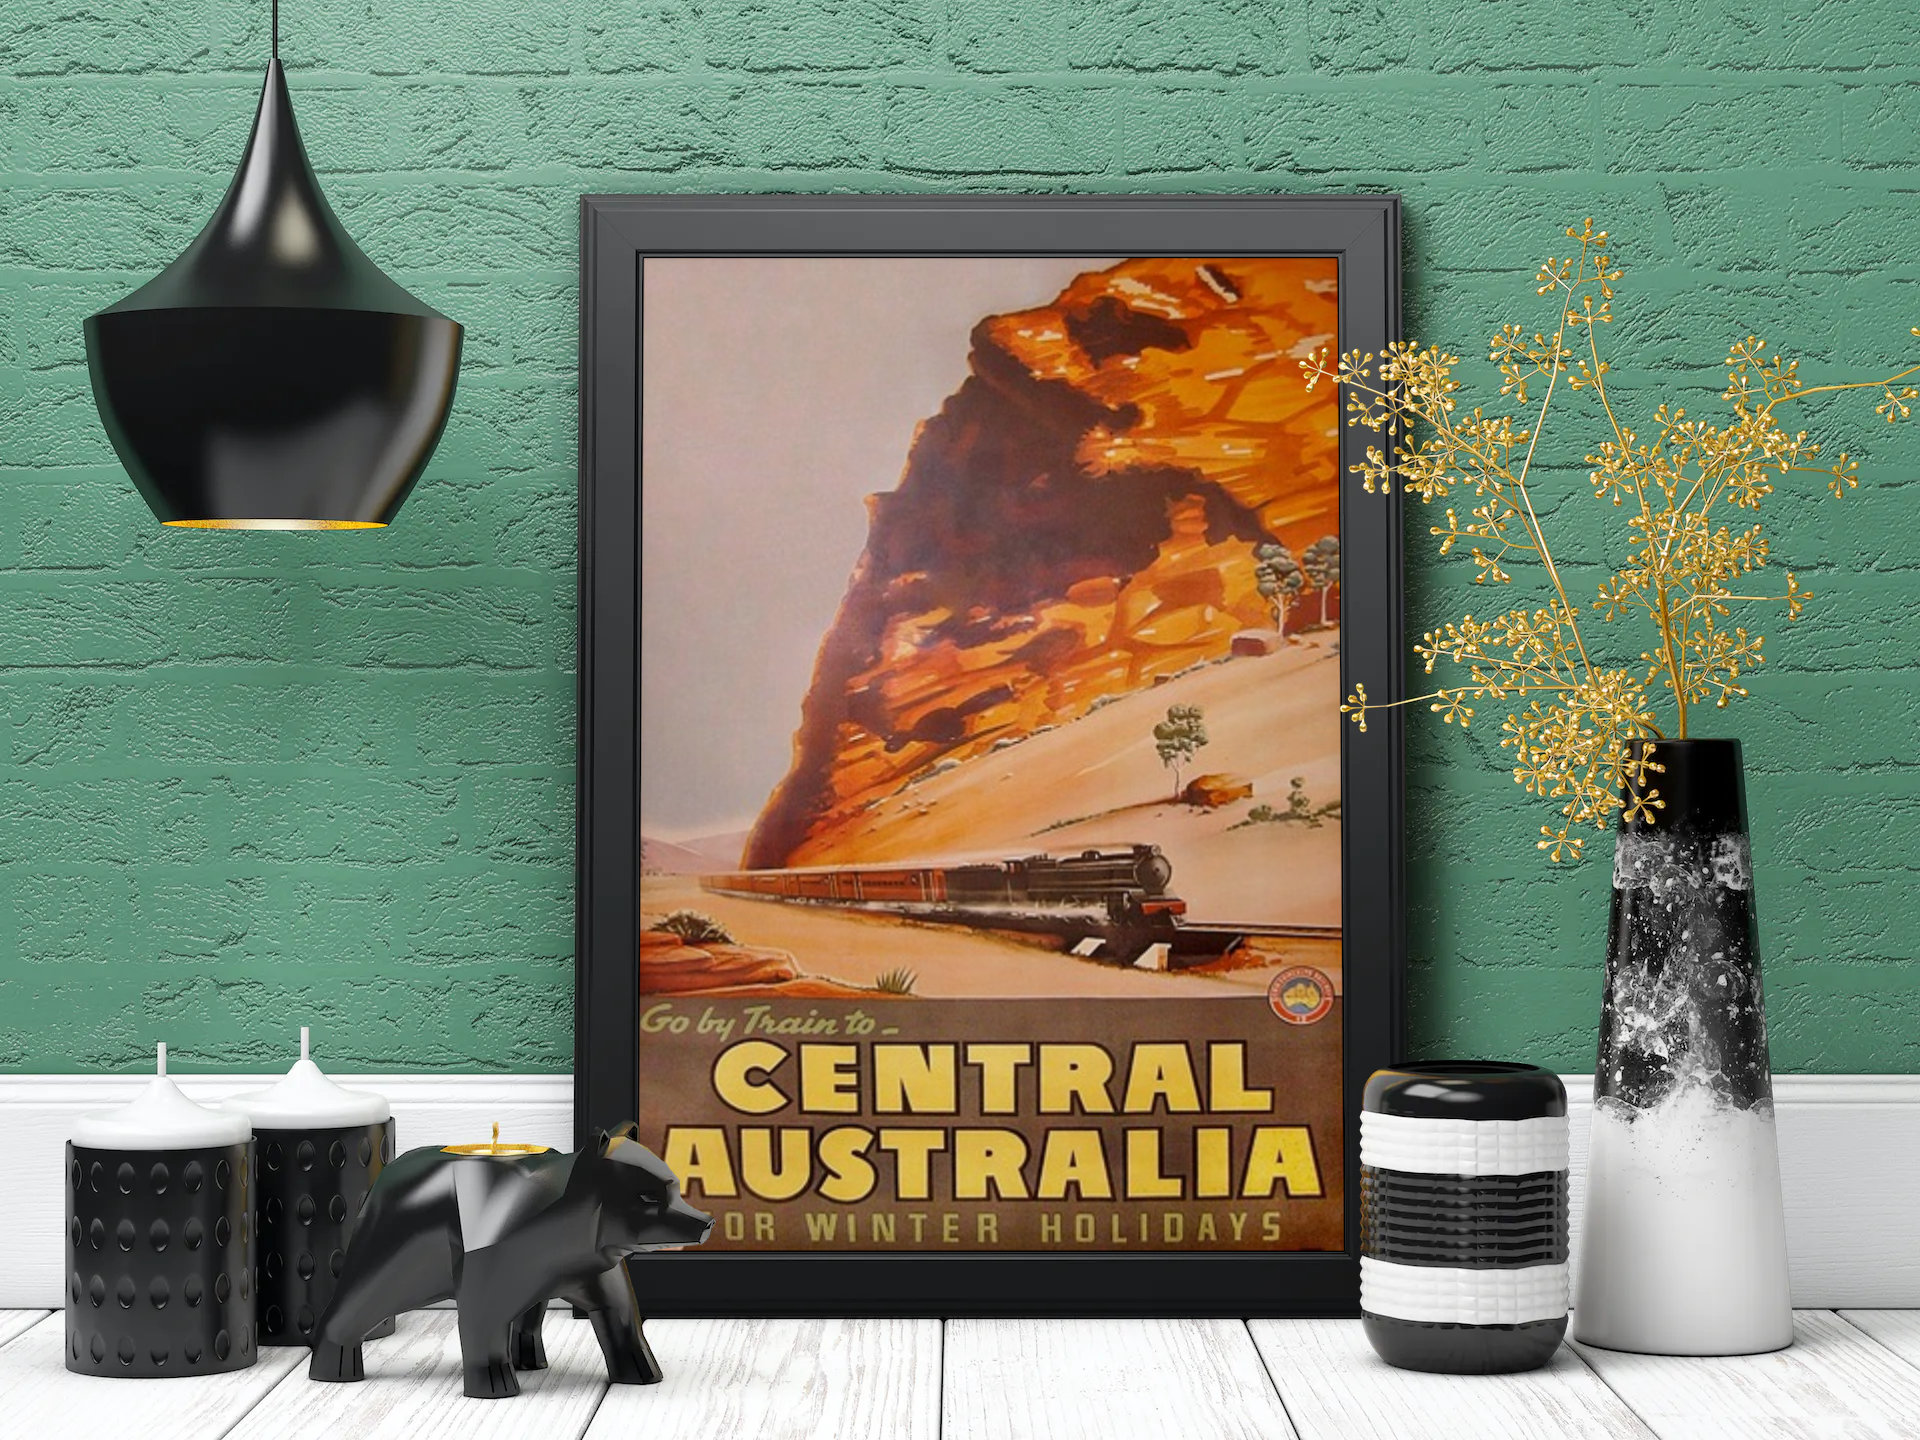 Vintage Australian Train Poster